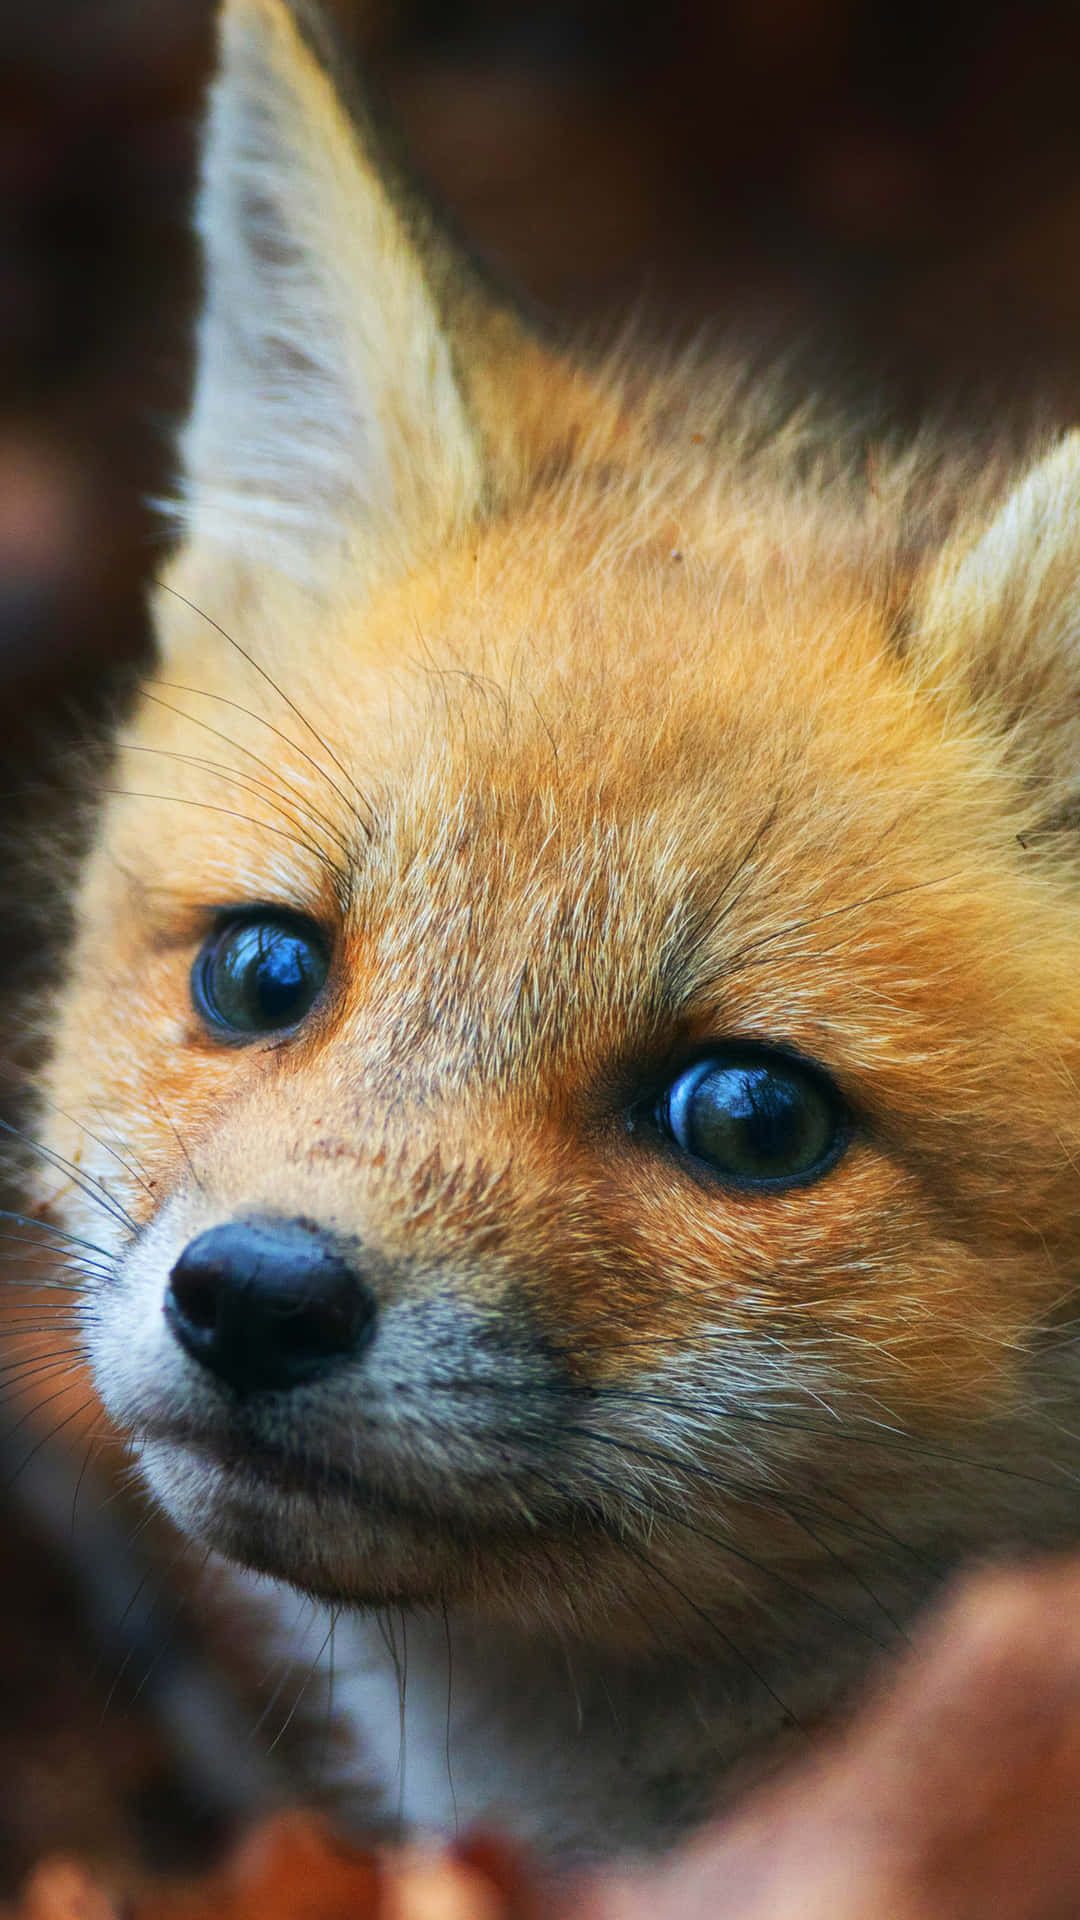 "adorable Fox Enjoying Mother Nature"